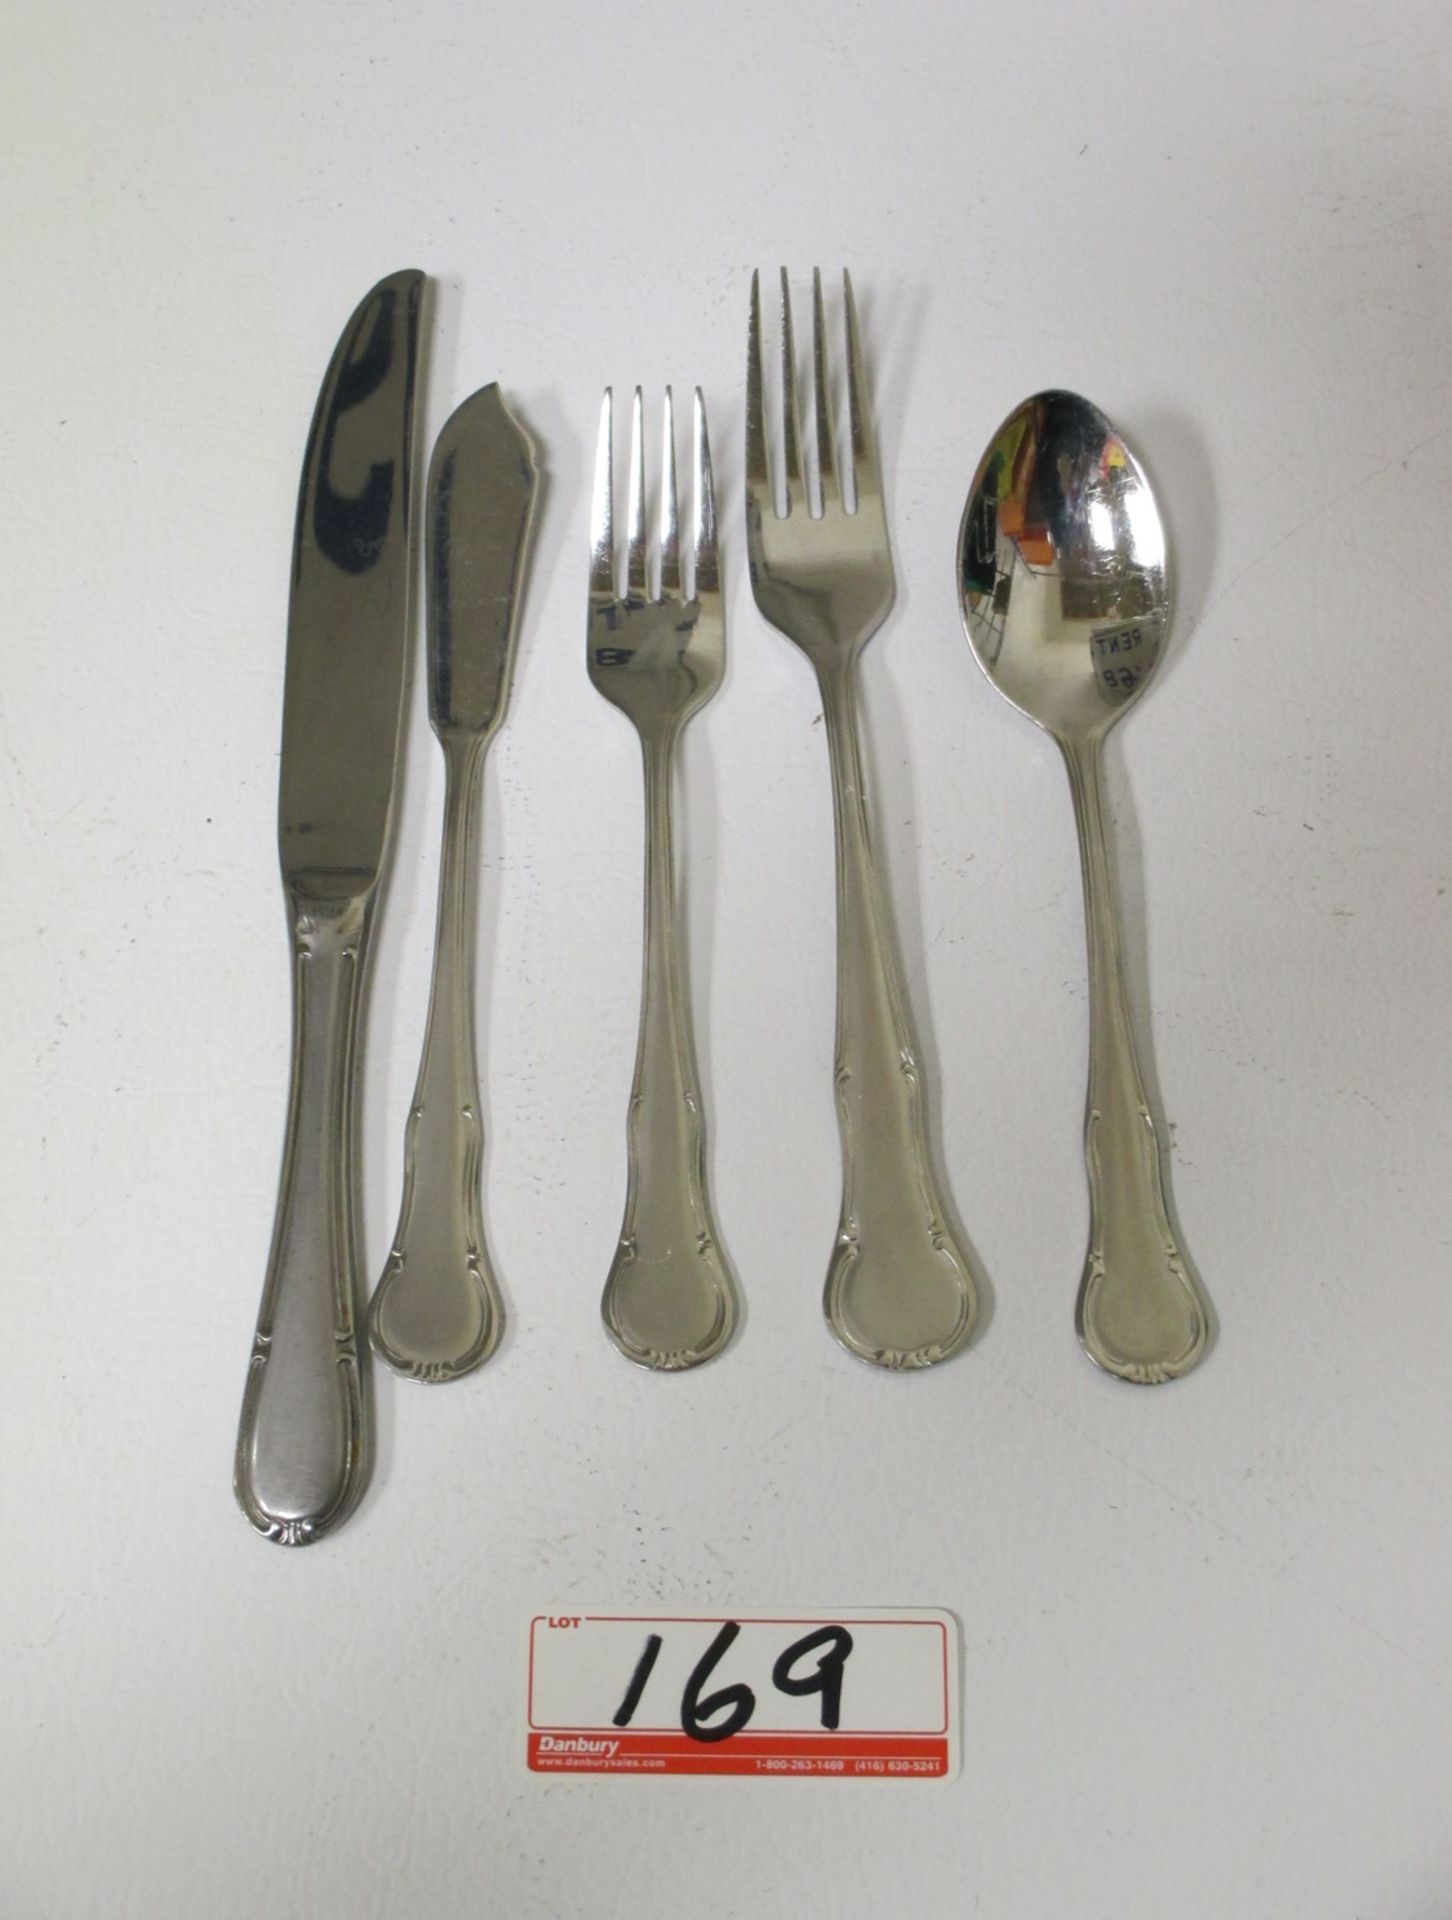 SET - MARSEILLE 18/10 (3 PC) CUTLERY SETS (DINNER + DESSERT FORKS, TEA SPOONS, TABLE + BUTTER KNIFE)